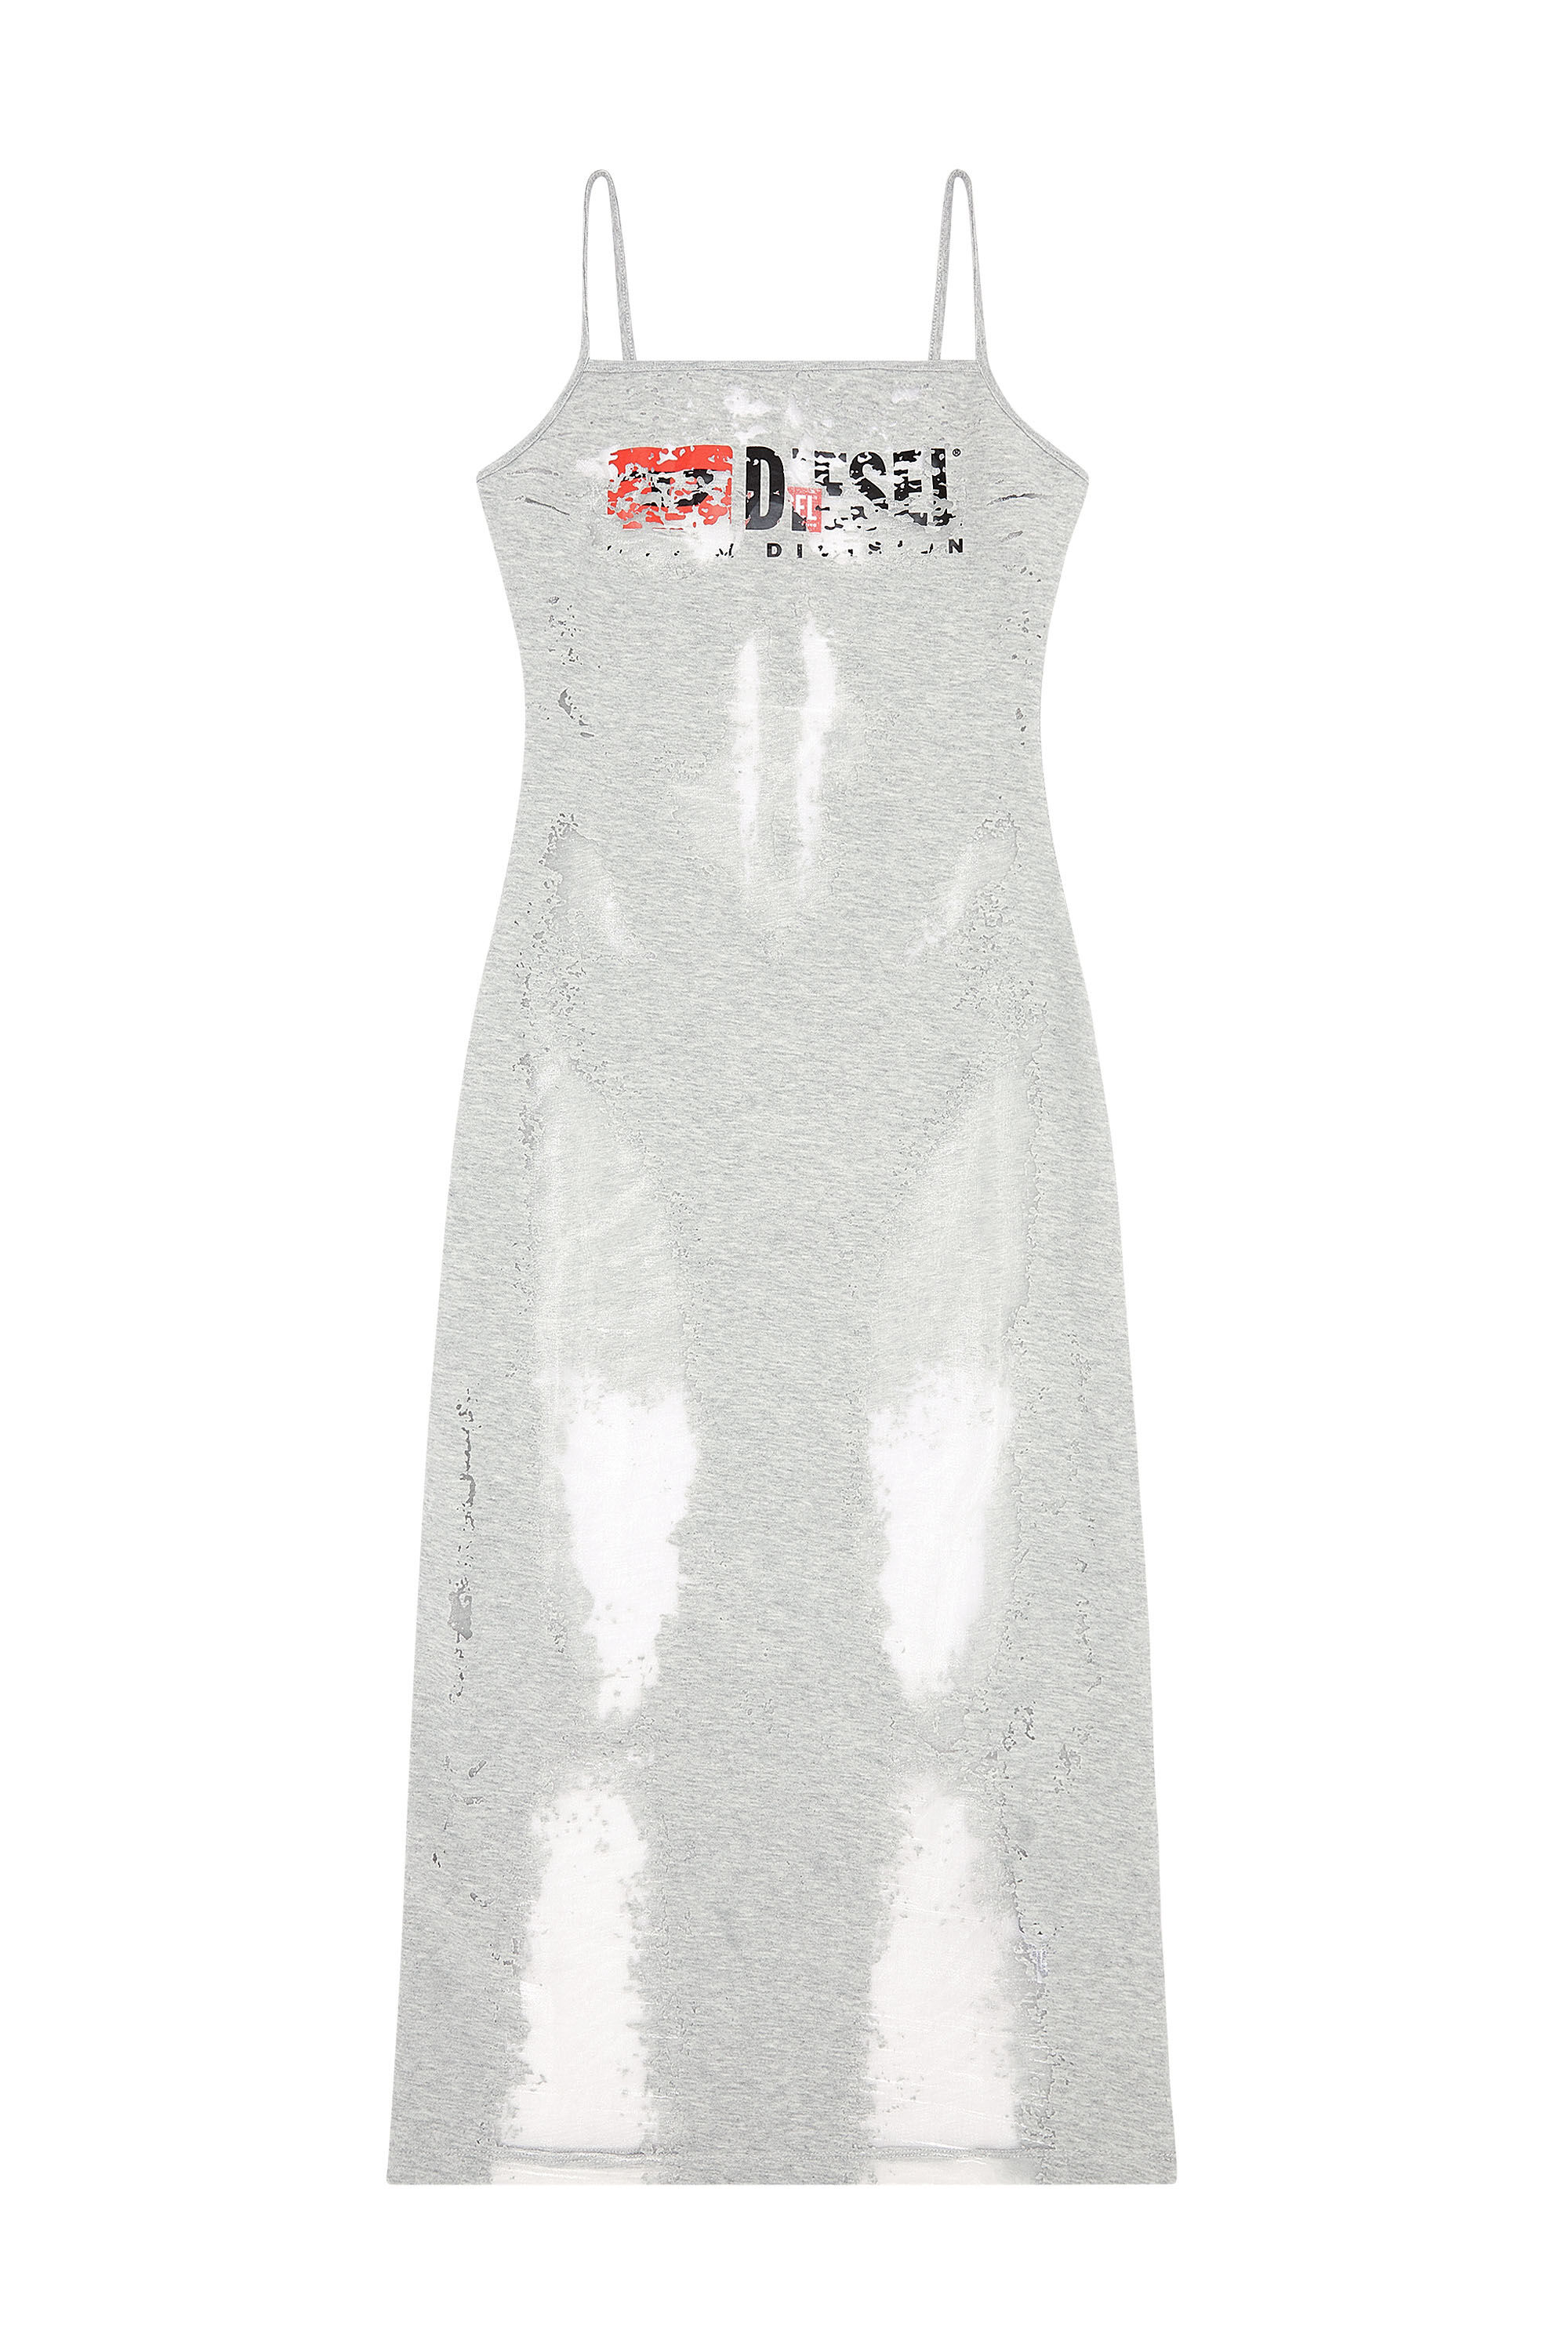 Diesel - D-HOPER-DEVO, Woman Jersey dress with see-through effect in Grey - Image 2